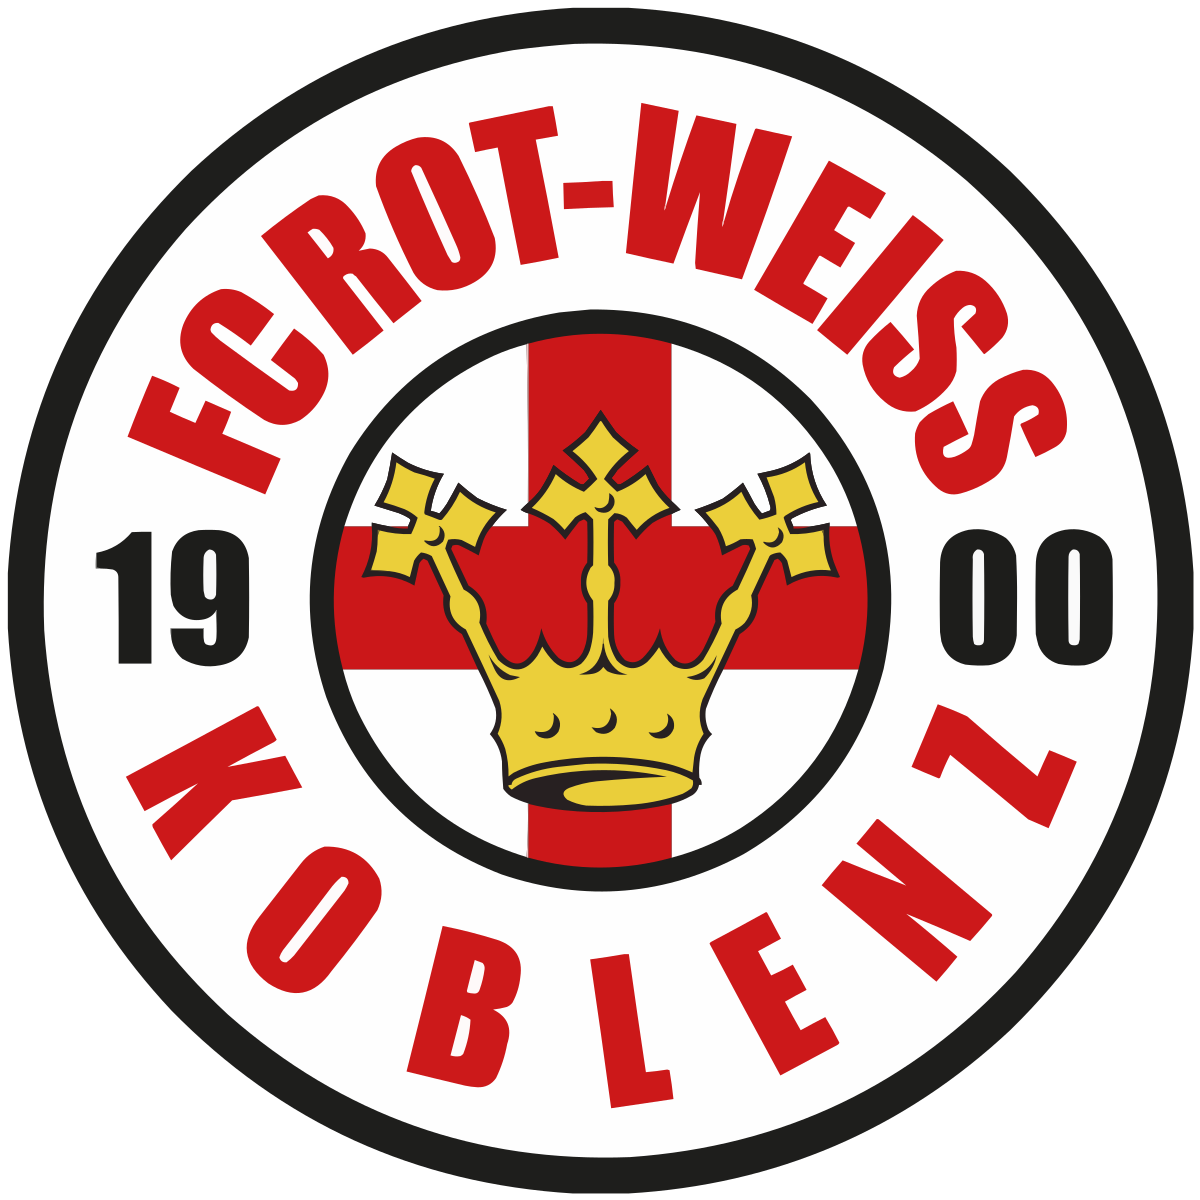 Rot-Weiß Koblenz